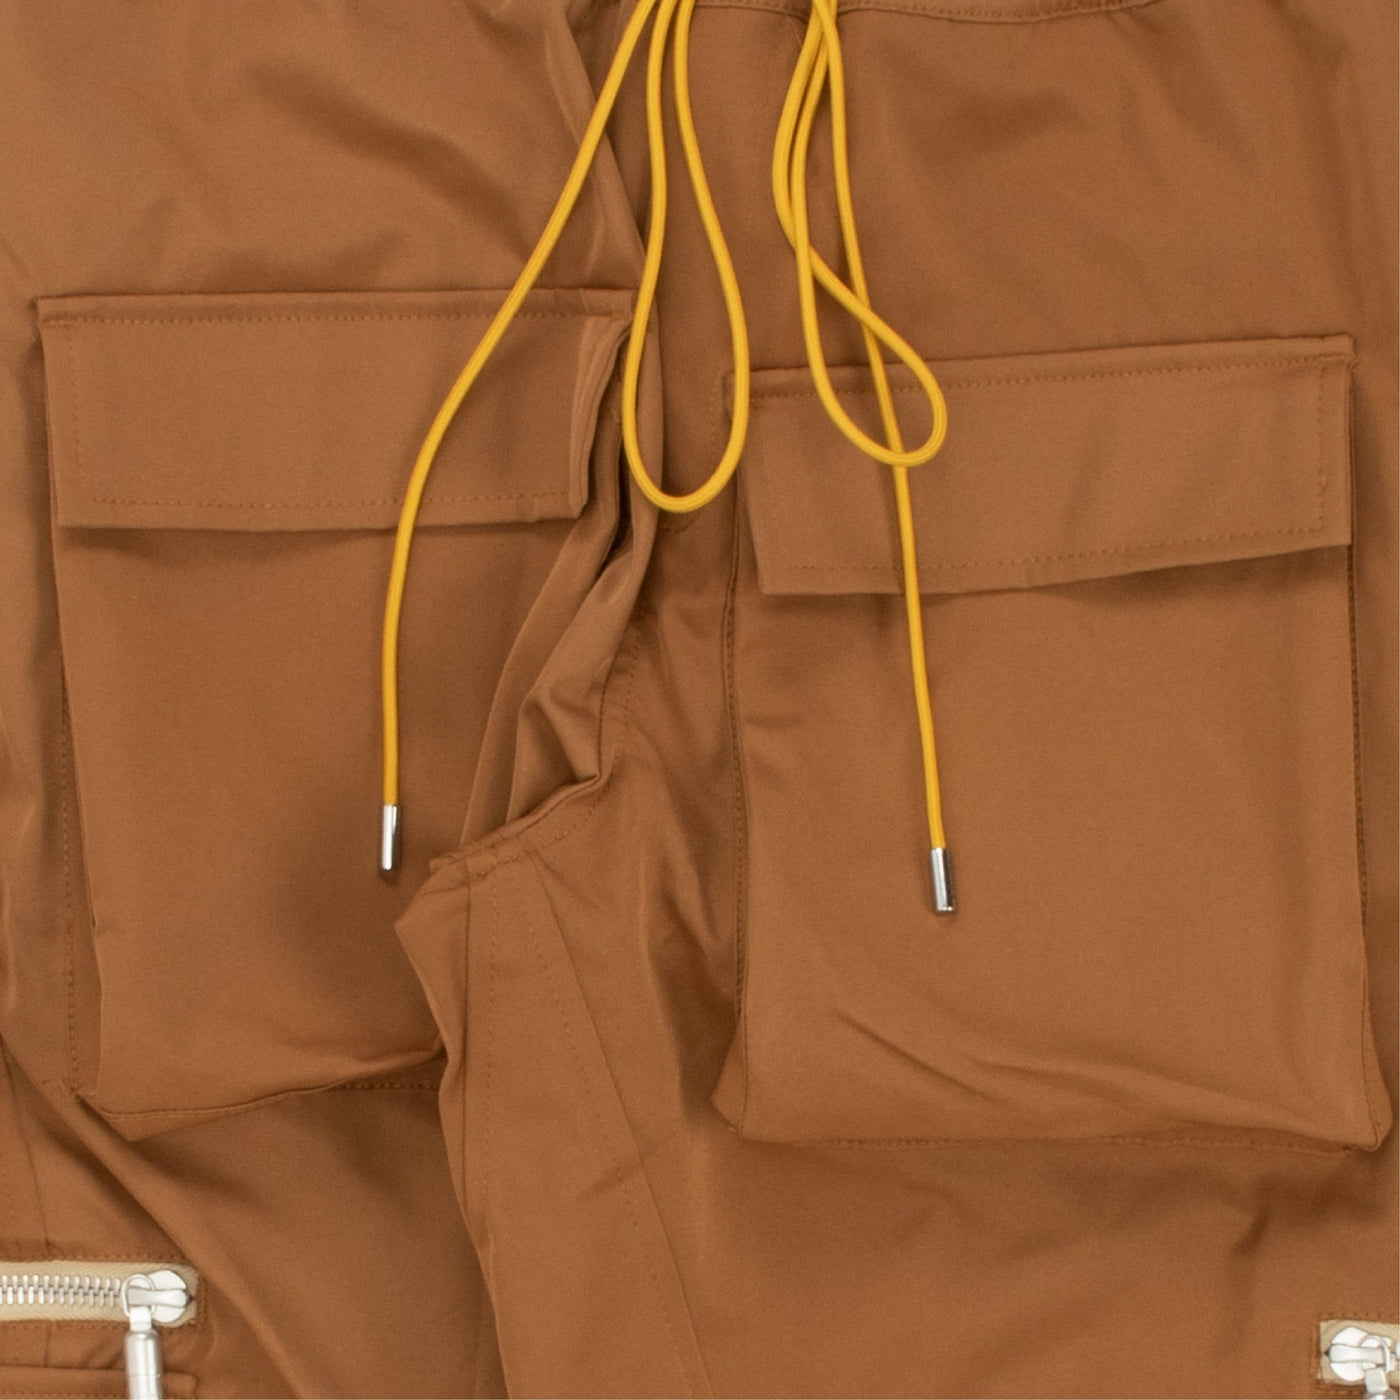 RHUDE - Pantalon cargo pant